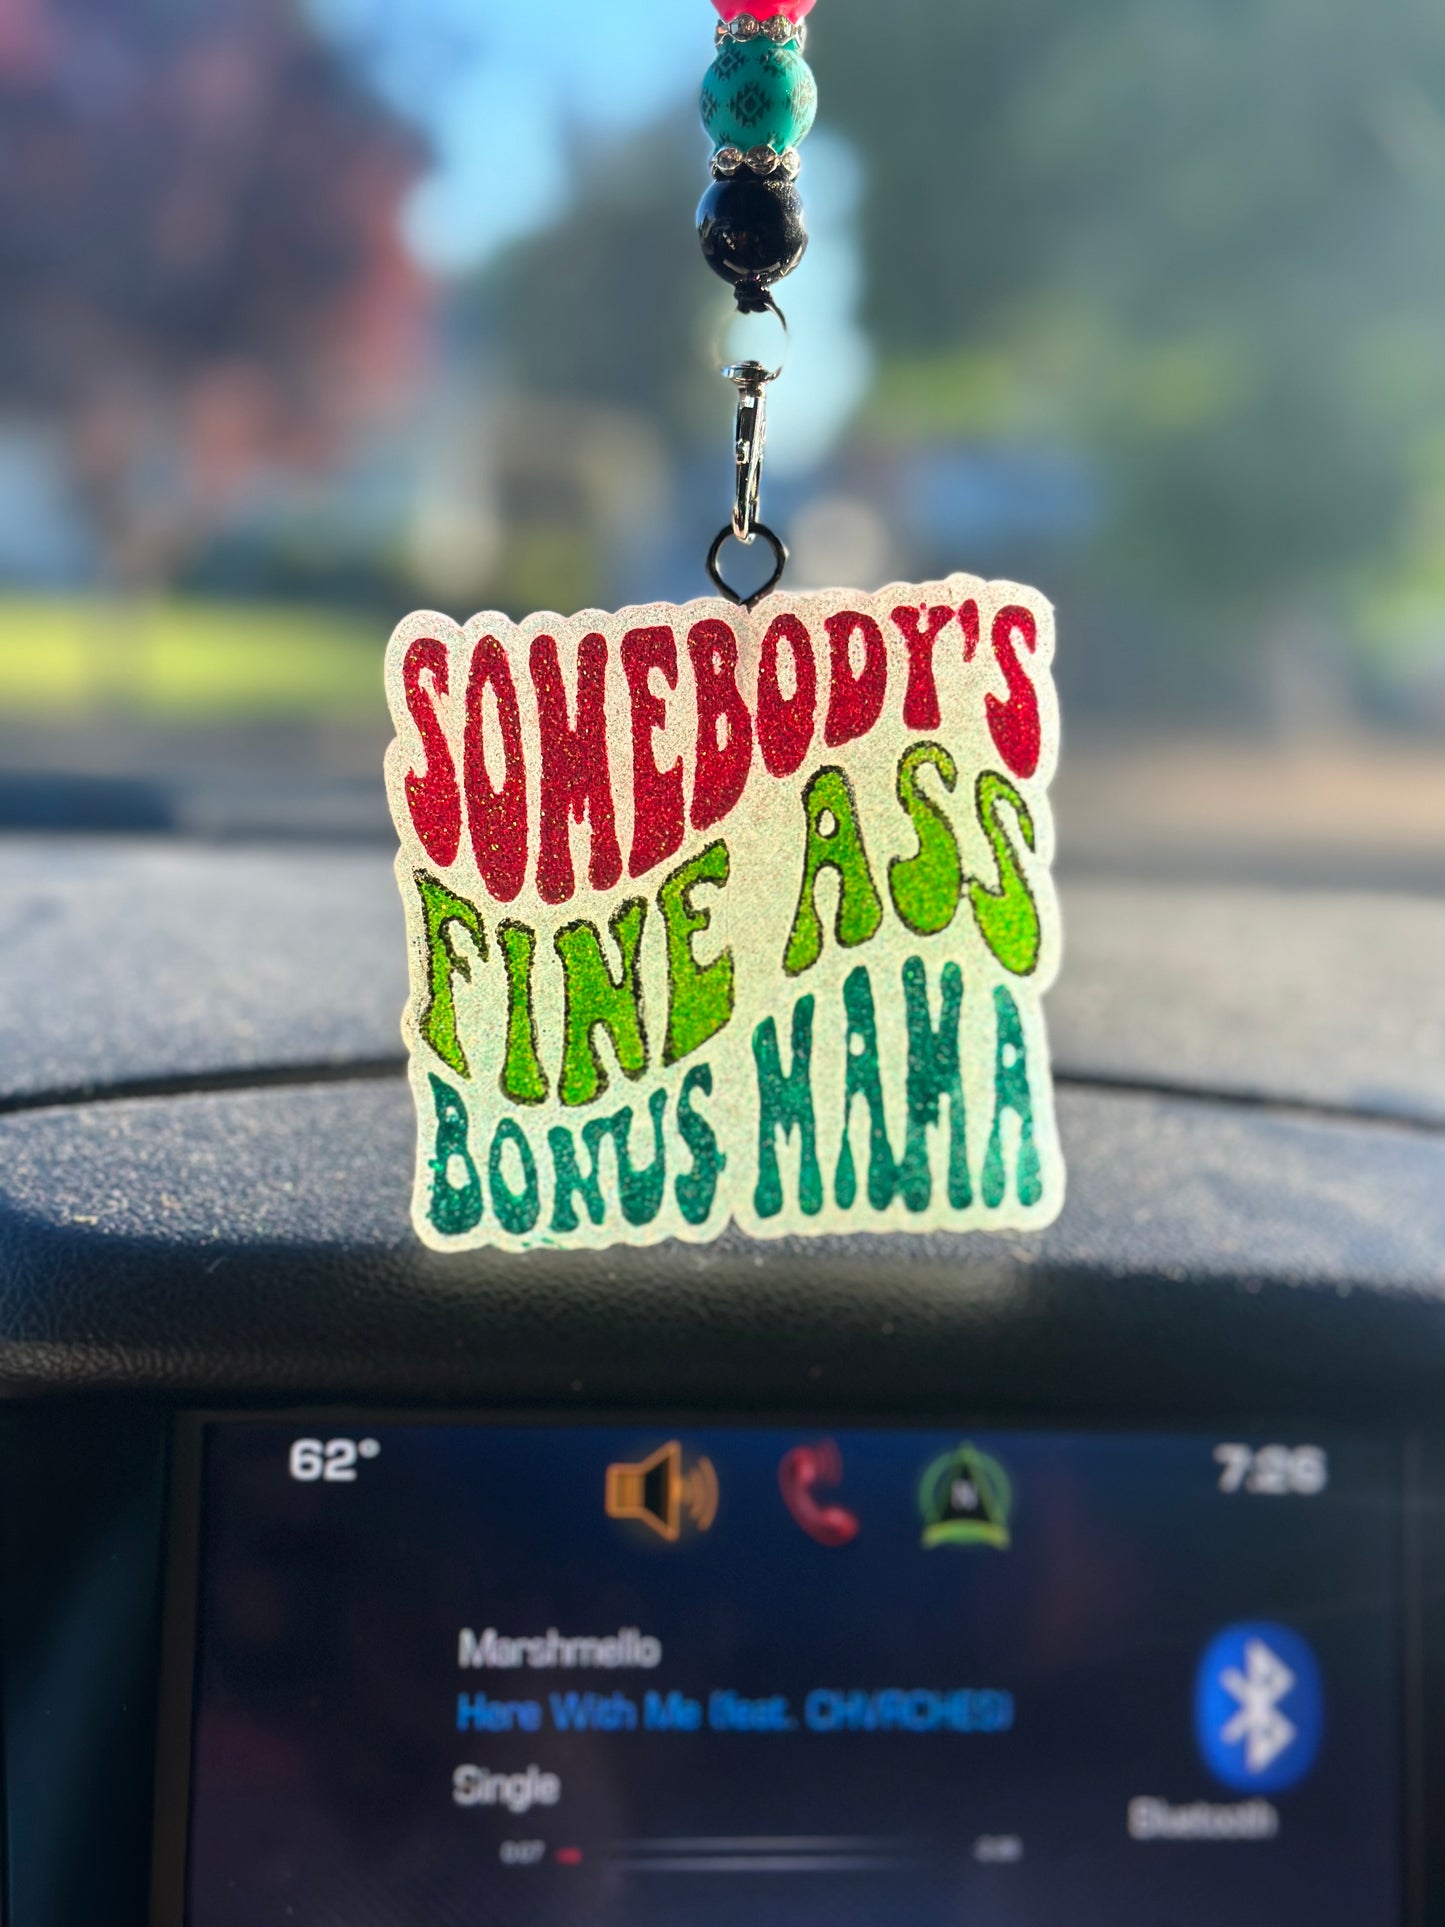 Somebody’s Fine Ass Bonus Mama